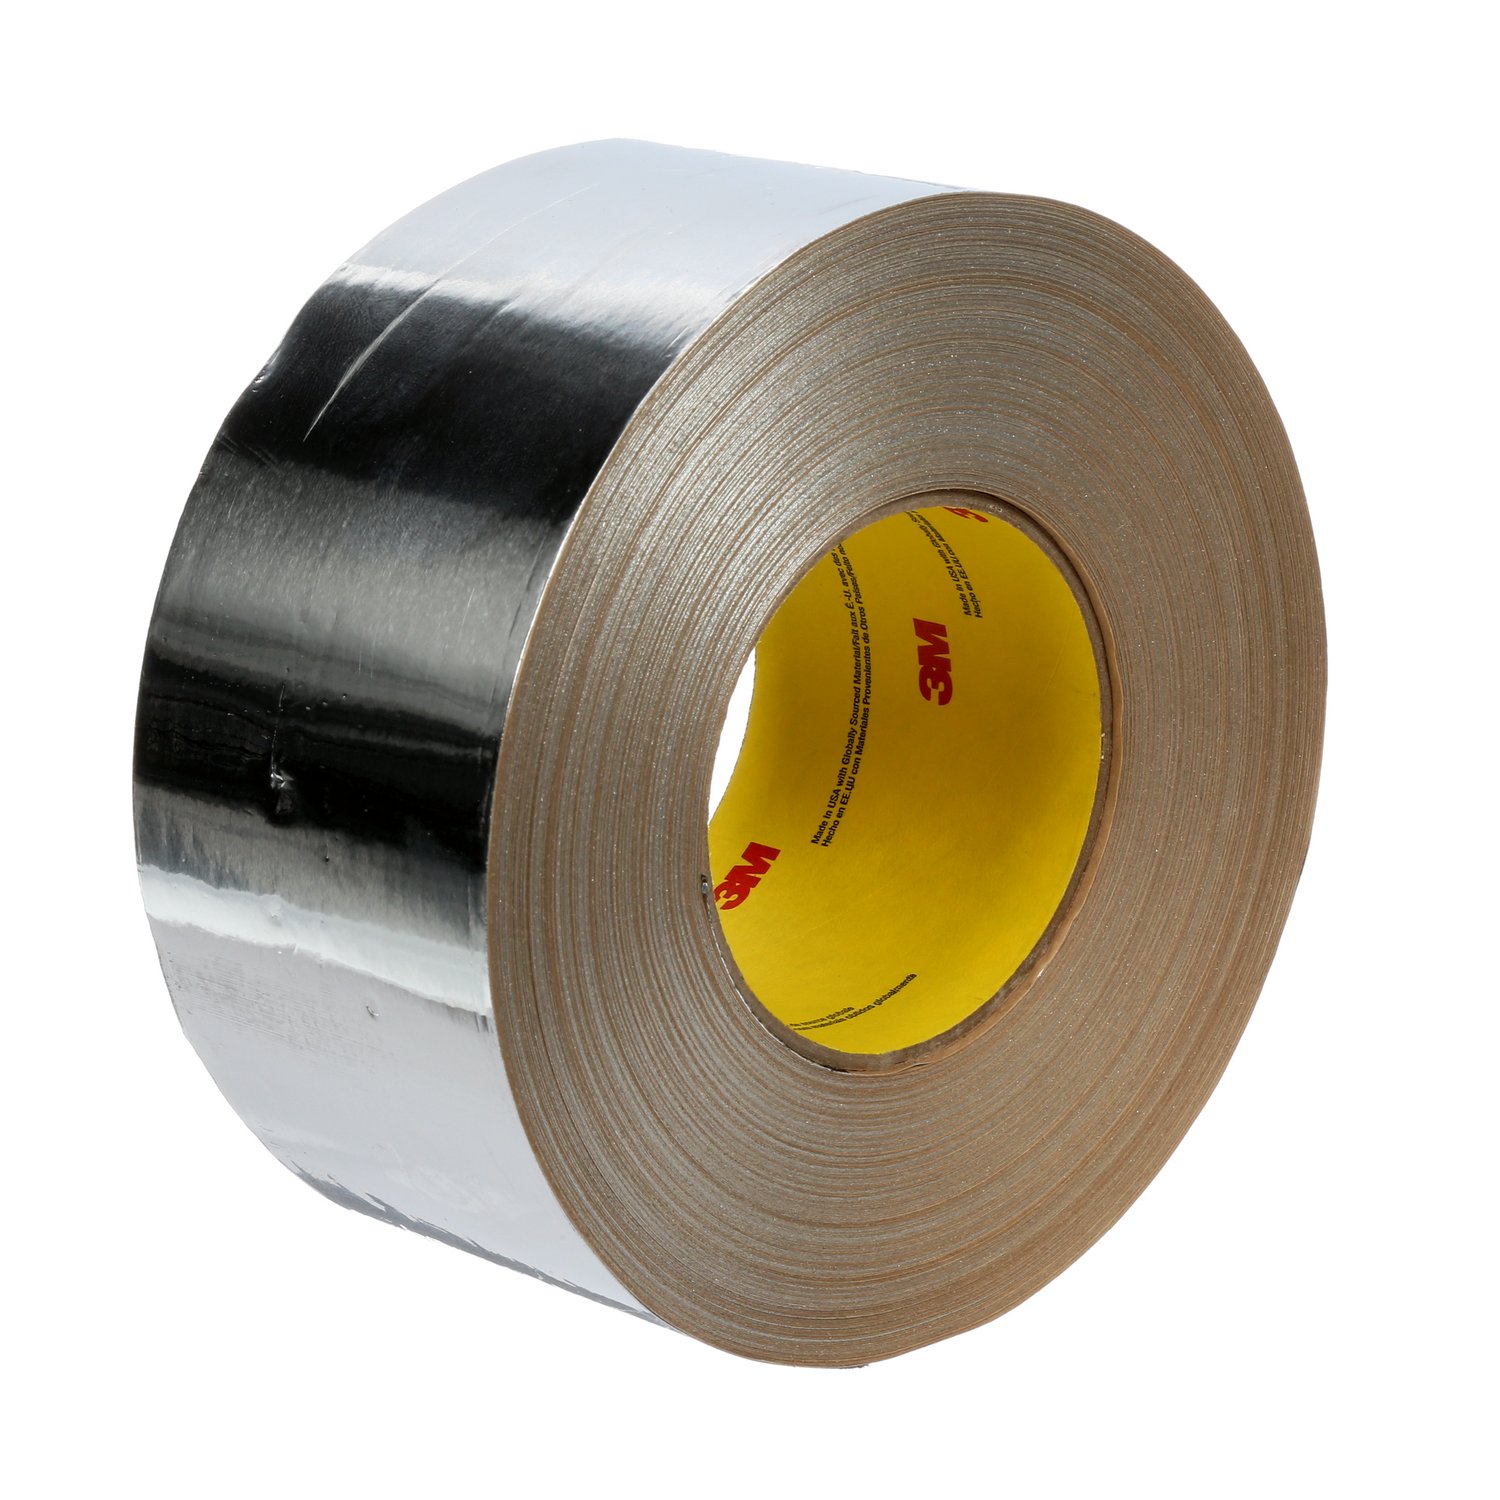 7100169857 - "3M Venture Tape Aluminum Foil Tape 1520CW, Silver, 63.5 mm x 45.7
m,
3.2 mil, 20 Rolls/Case"